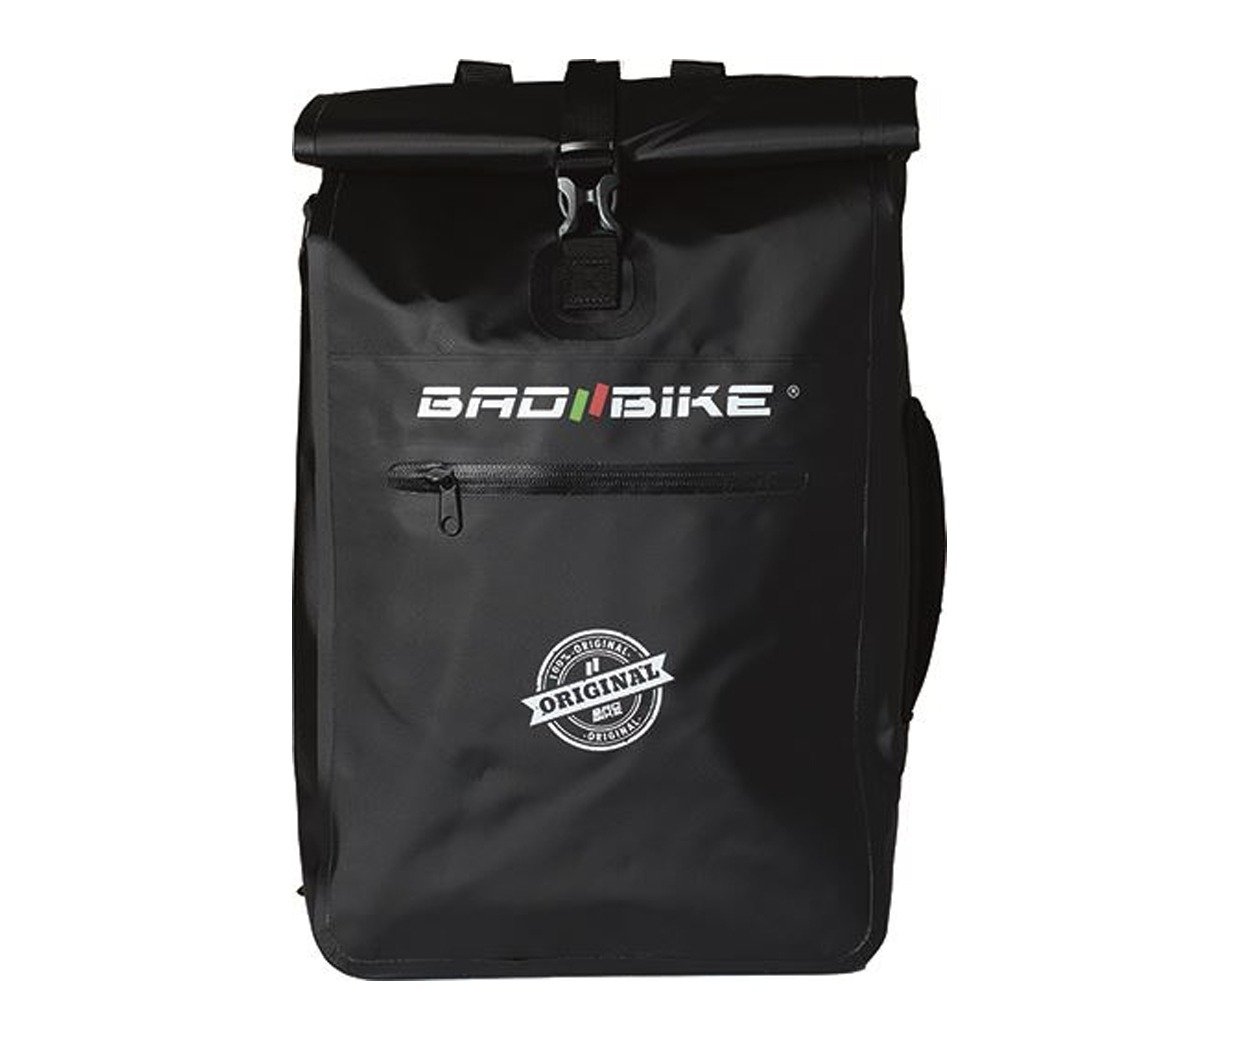 Multipurpose Bad Bike Backpack